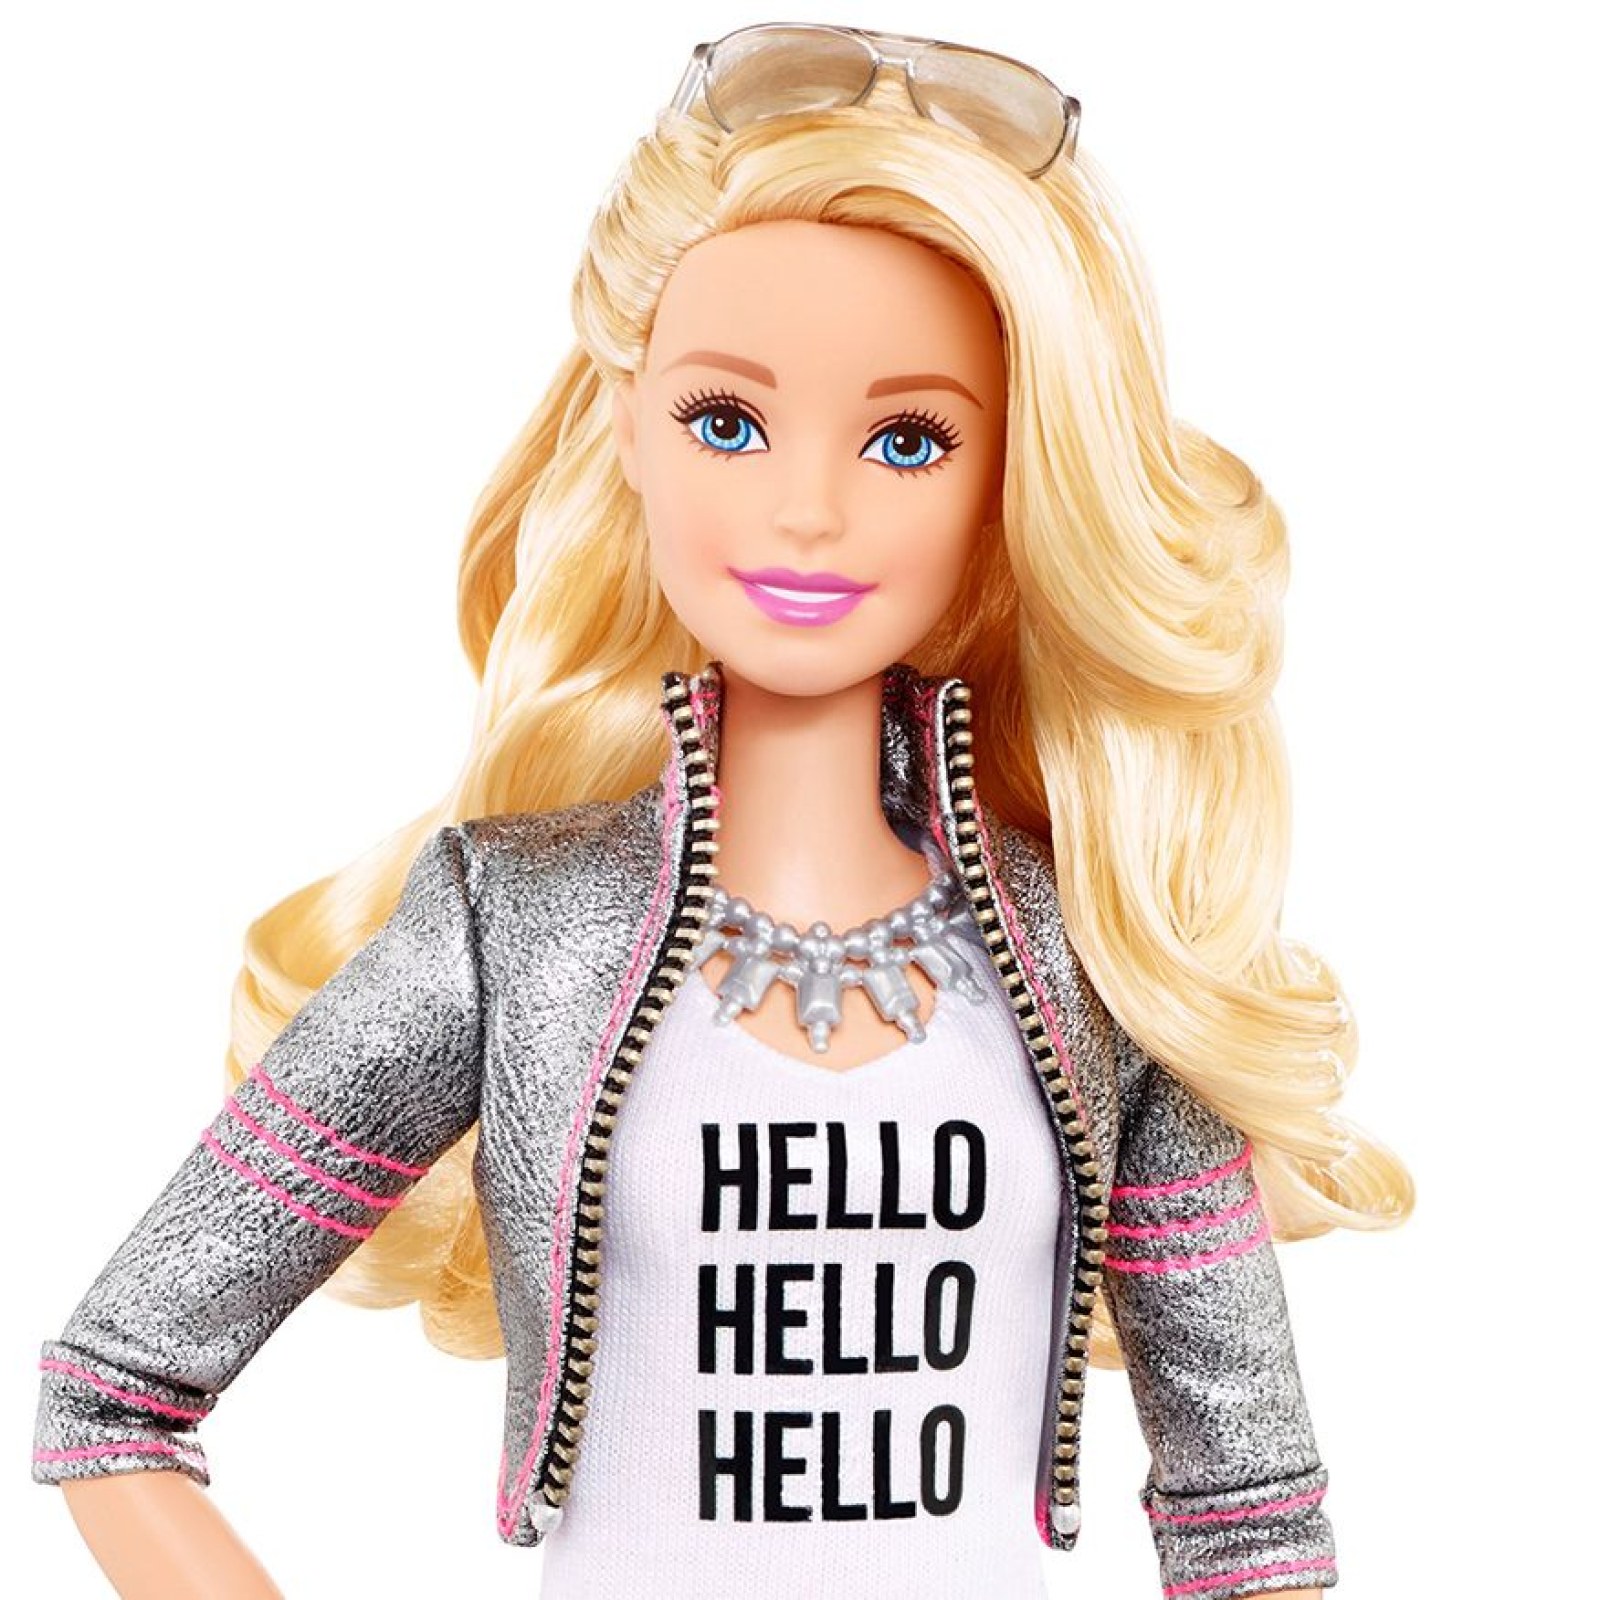 Meet Hello Barbie: A Wi-Fi That Talks to